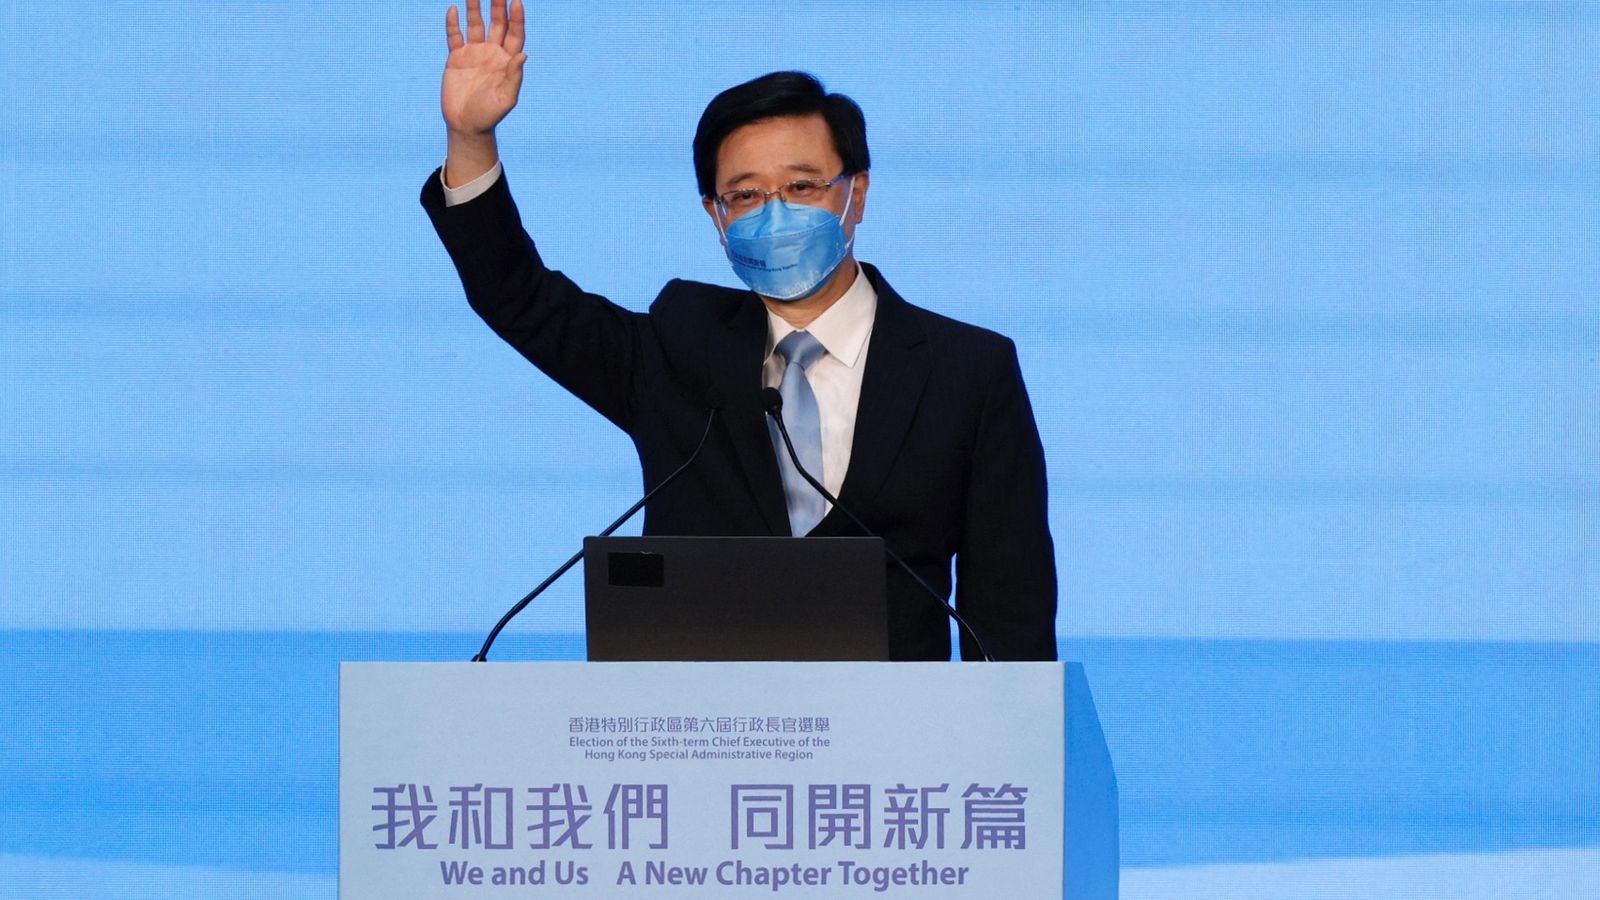 الصين تعيّن وزيراً دفاعياً سابقاً صارماً رئيساً جديداً لهونغ كونغ بعد انتخاب شخص واحد |  اخبار العالم